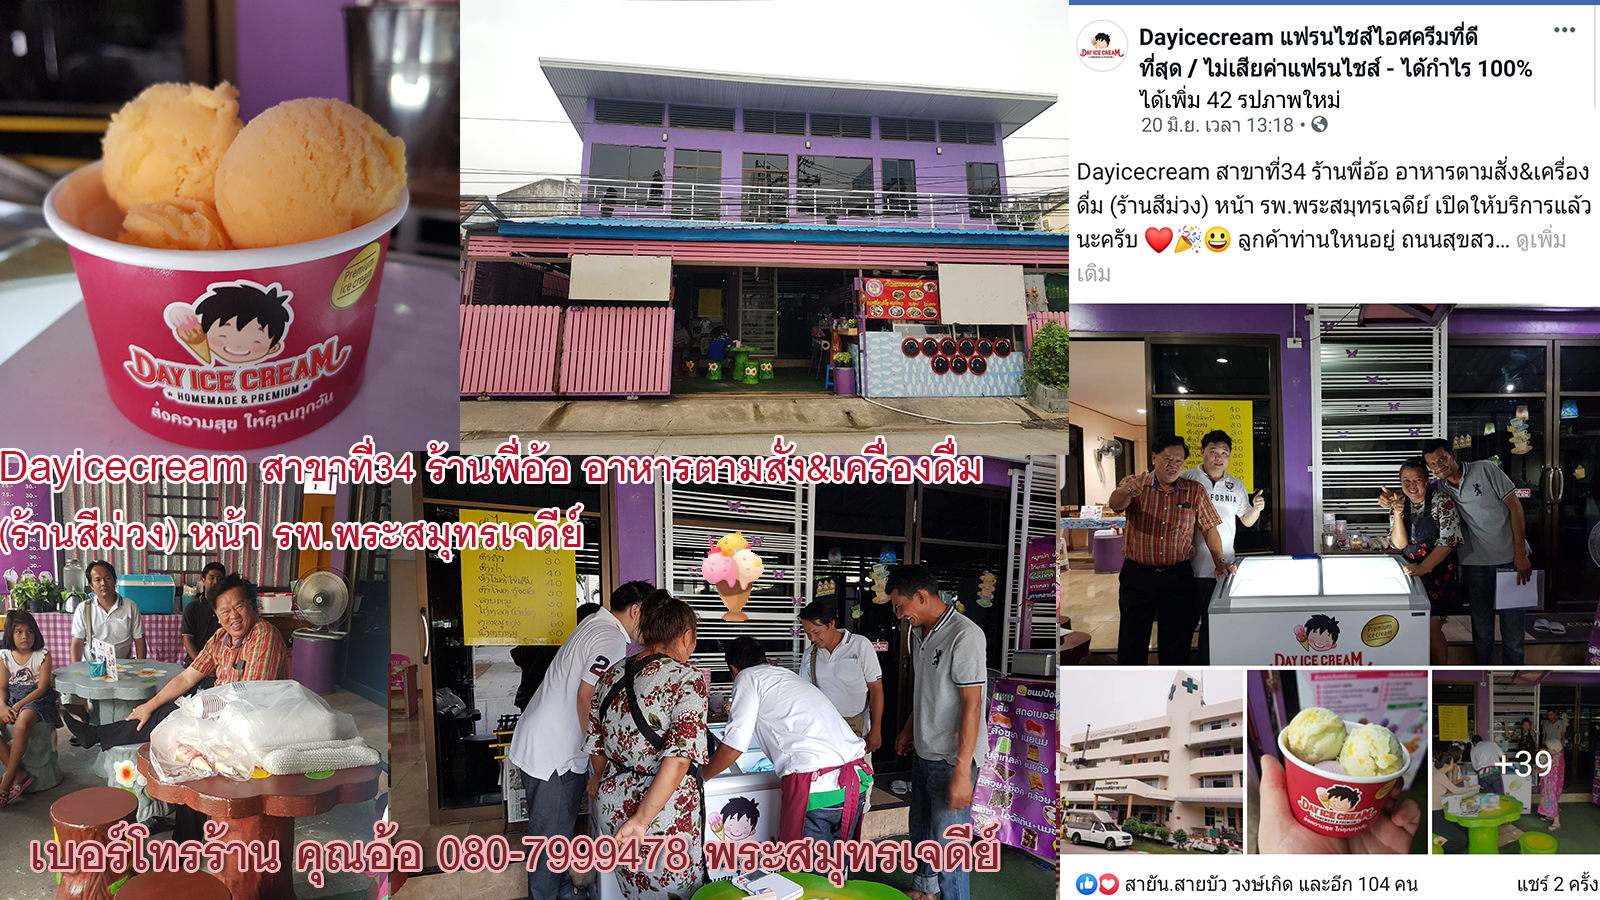 Dayicecream #0046 สาขาที่34 ร้านพี่อ้อ อาหารตามสั่ง&เครื่องดื่ม (ร้านสีม่วง) หน้า รพ.พระสมุทรเจดีย์ 